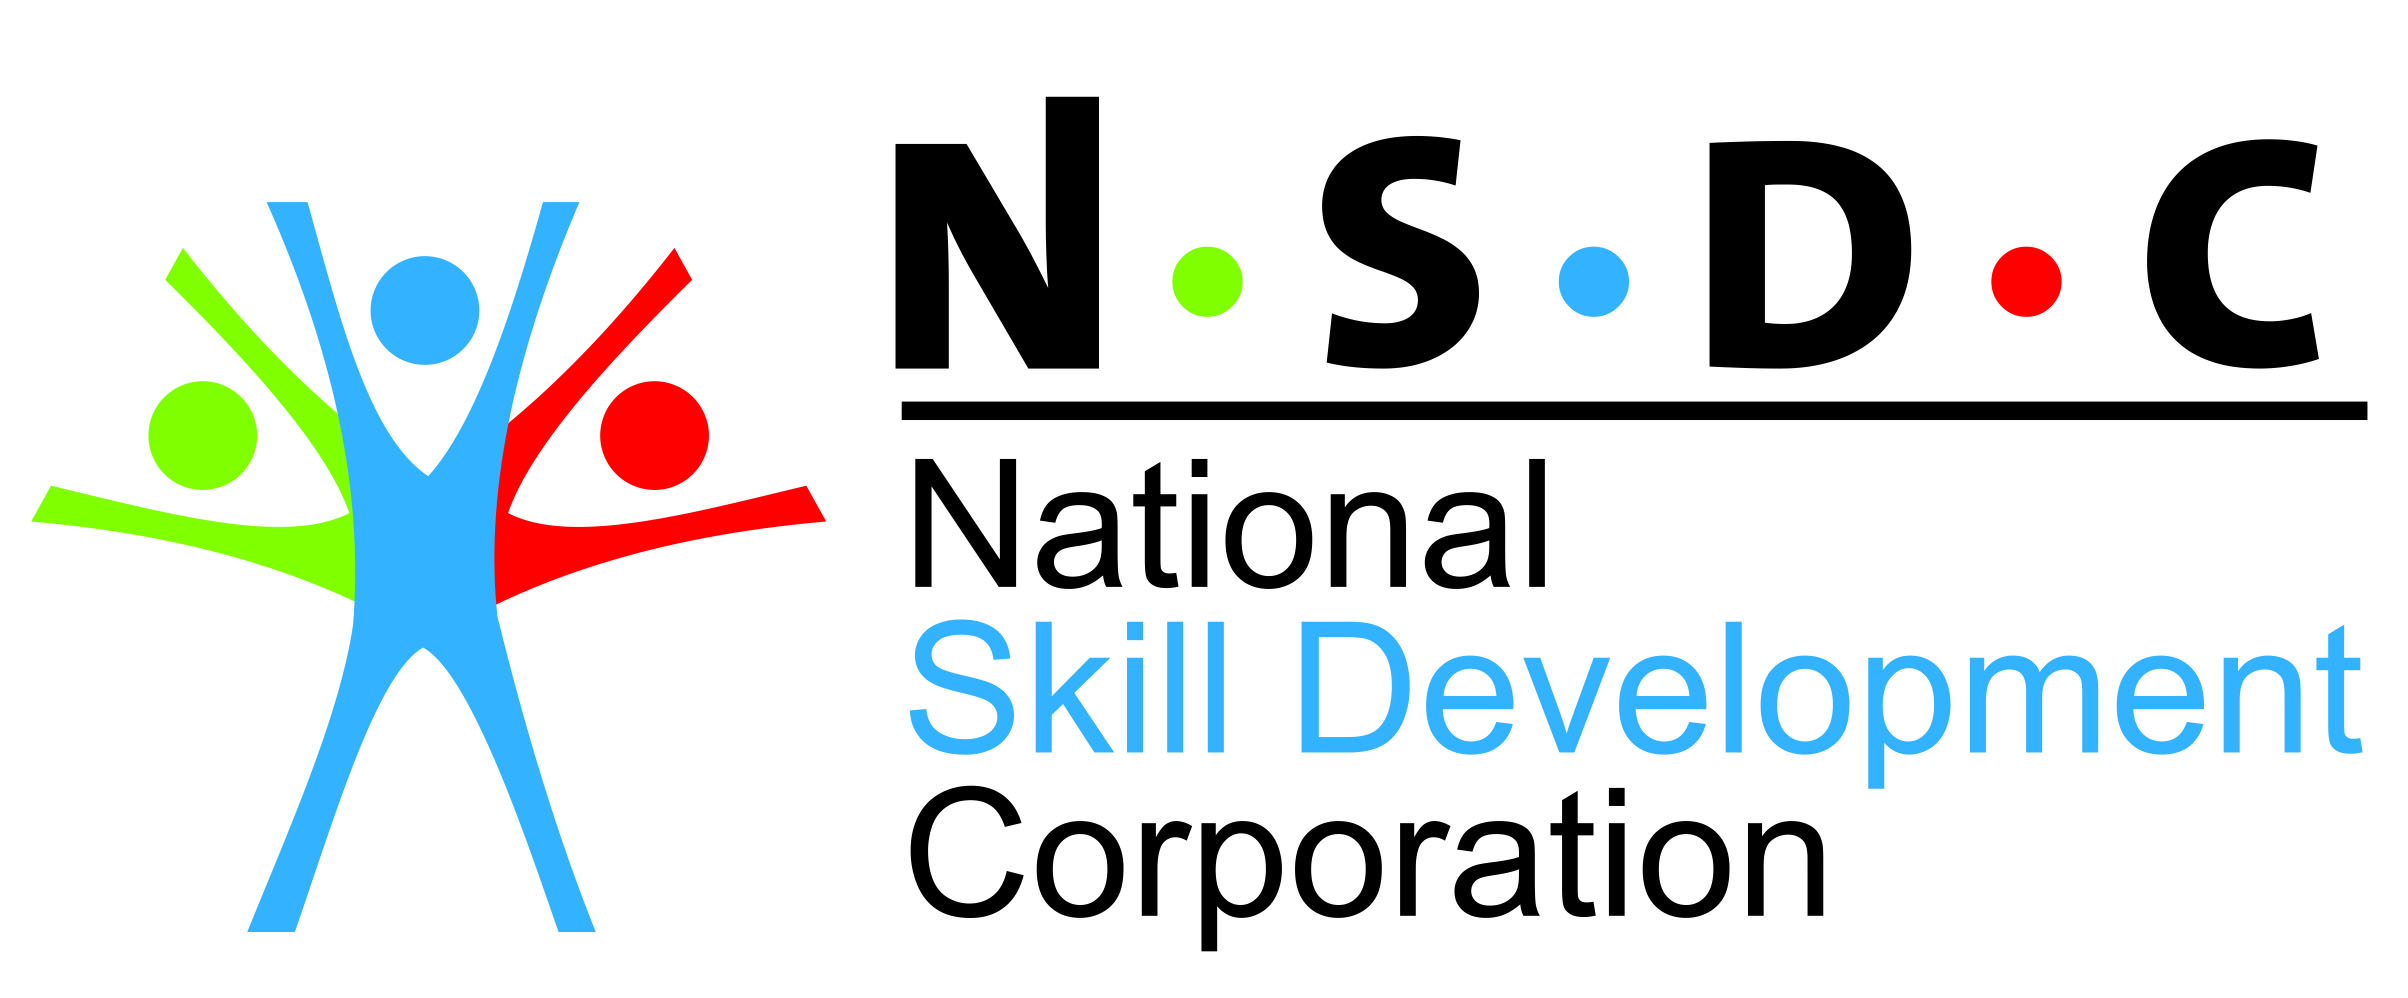 Indian National Skill Development Corporation